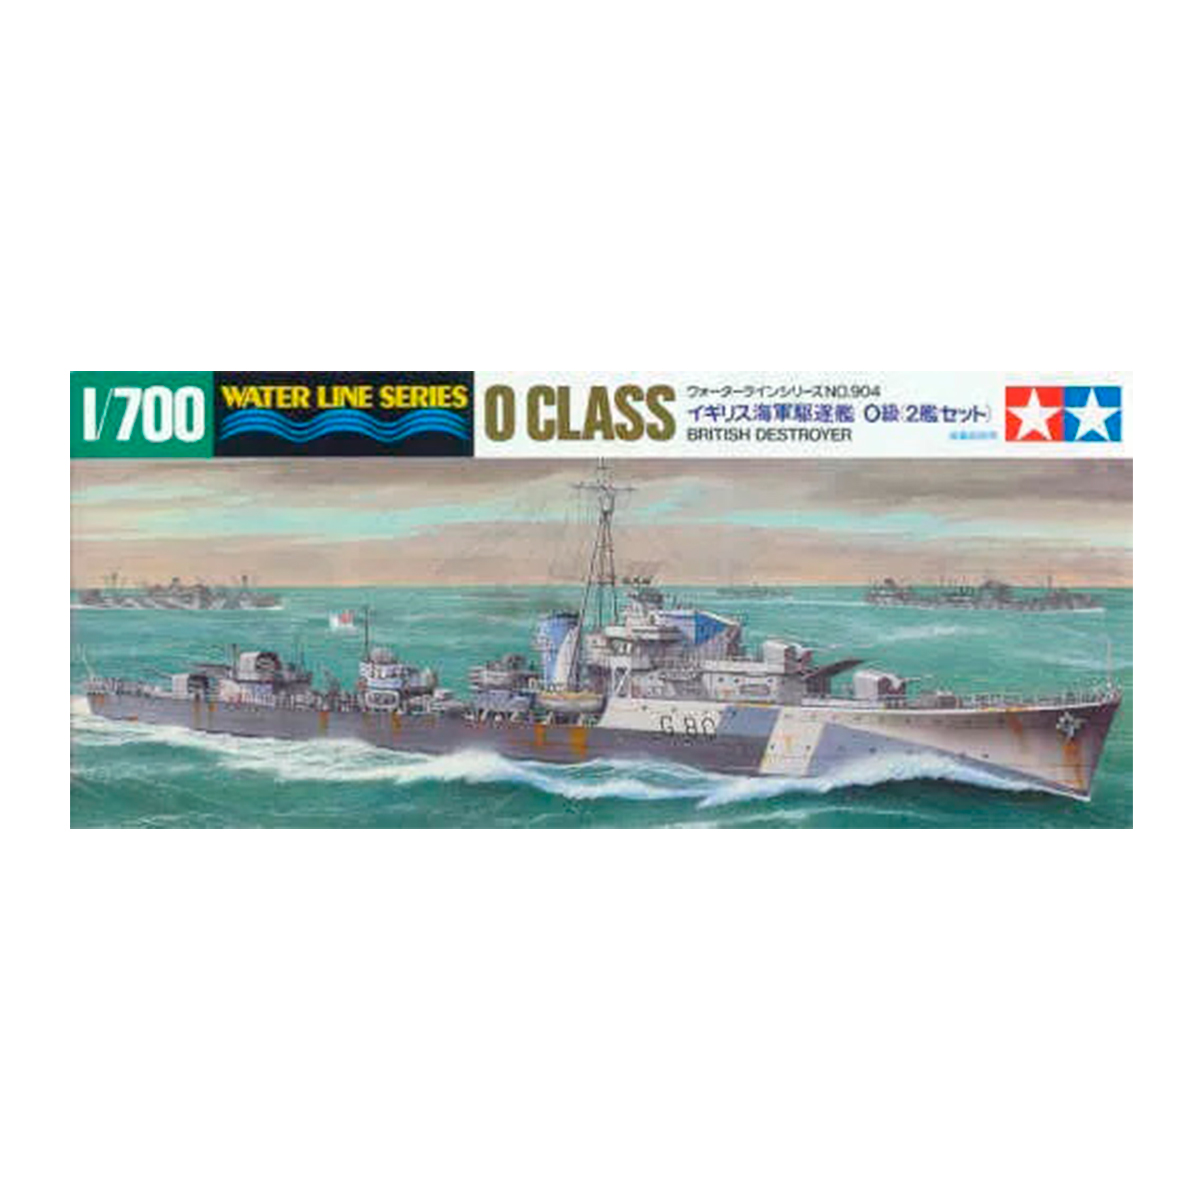 1/700 British Destroyer O Class